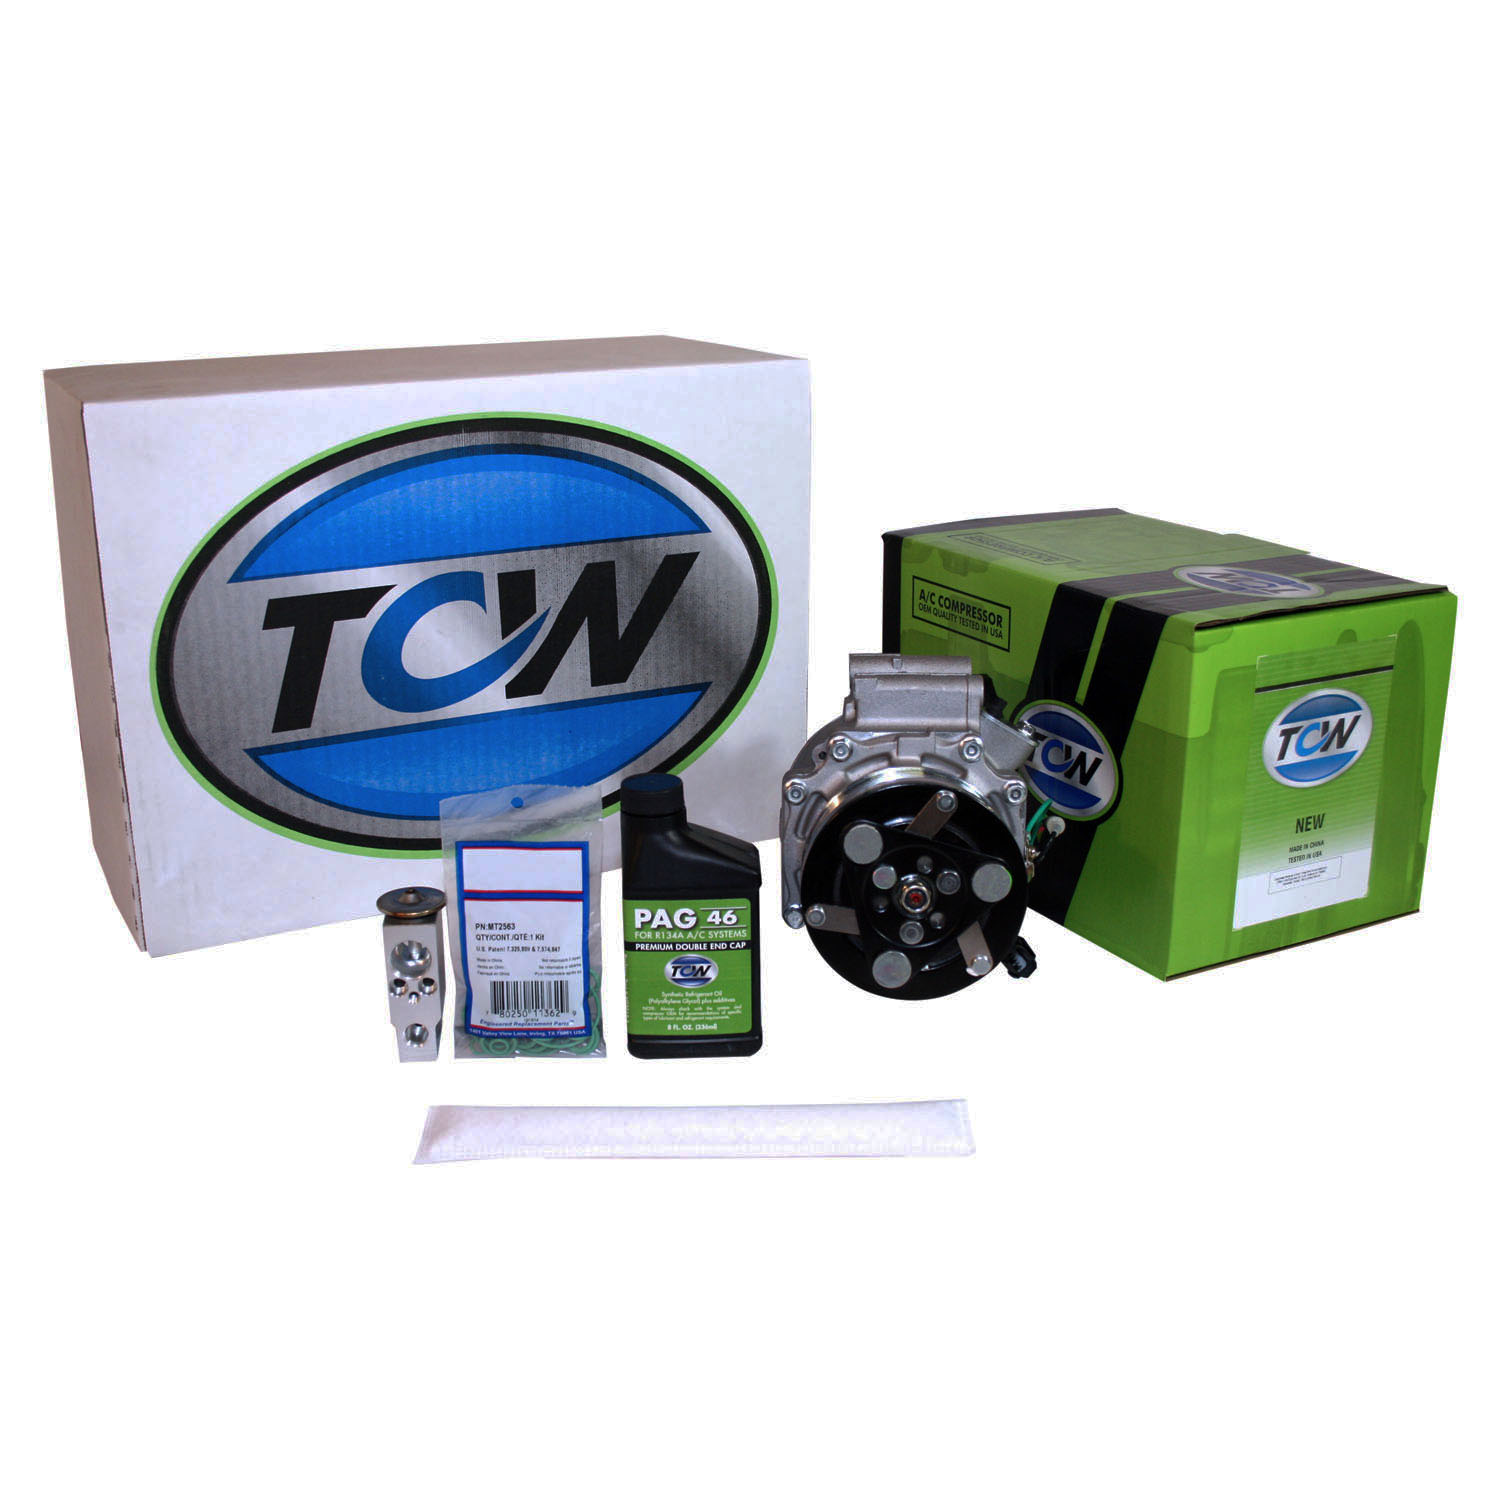 TCW Vehicle A/C Kit K1000206N New Product Image field_60b6a13a6e67c